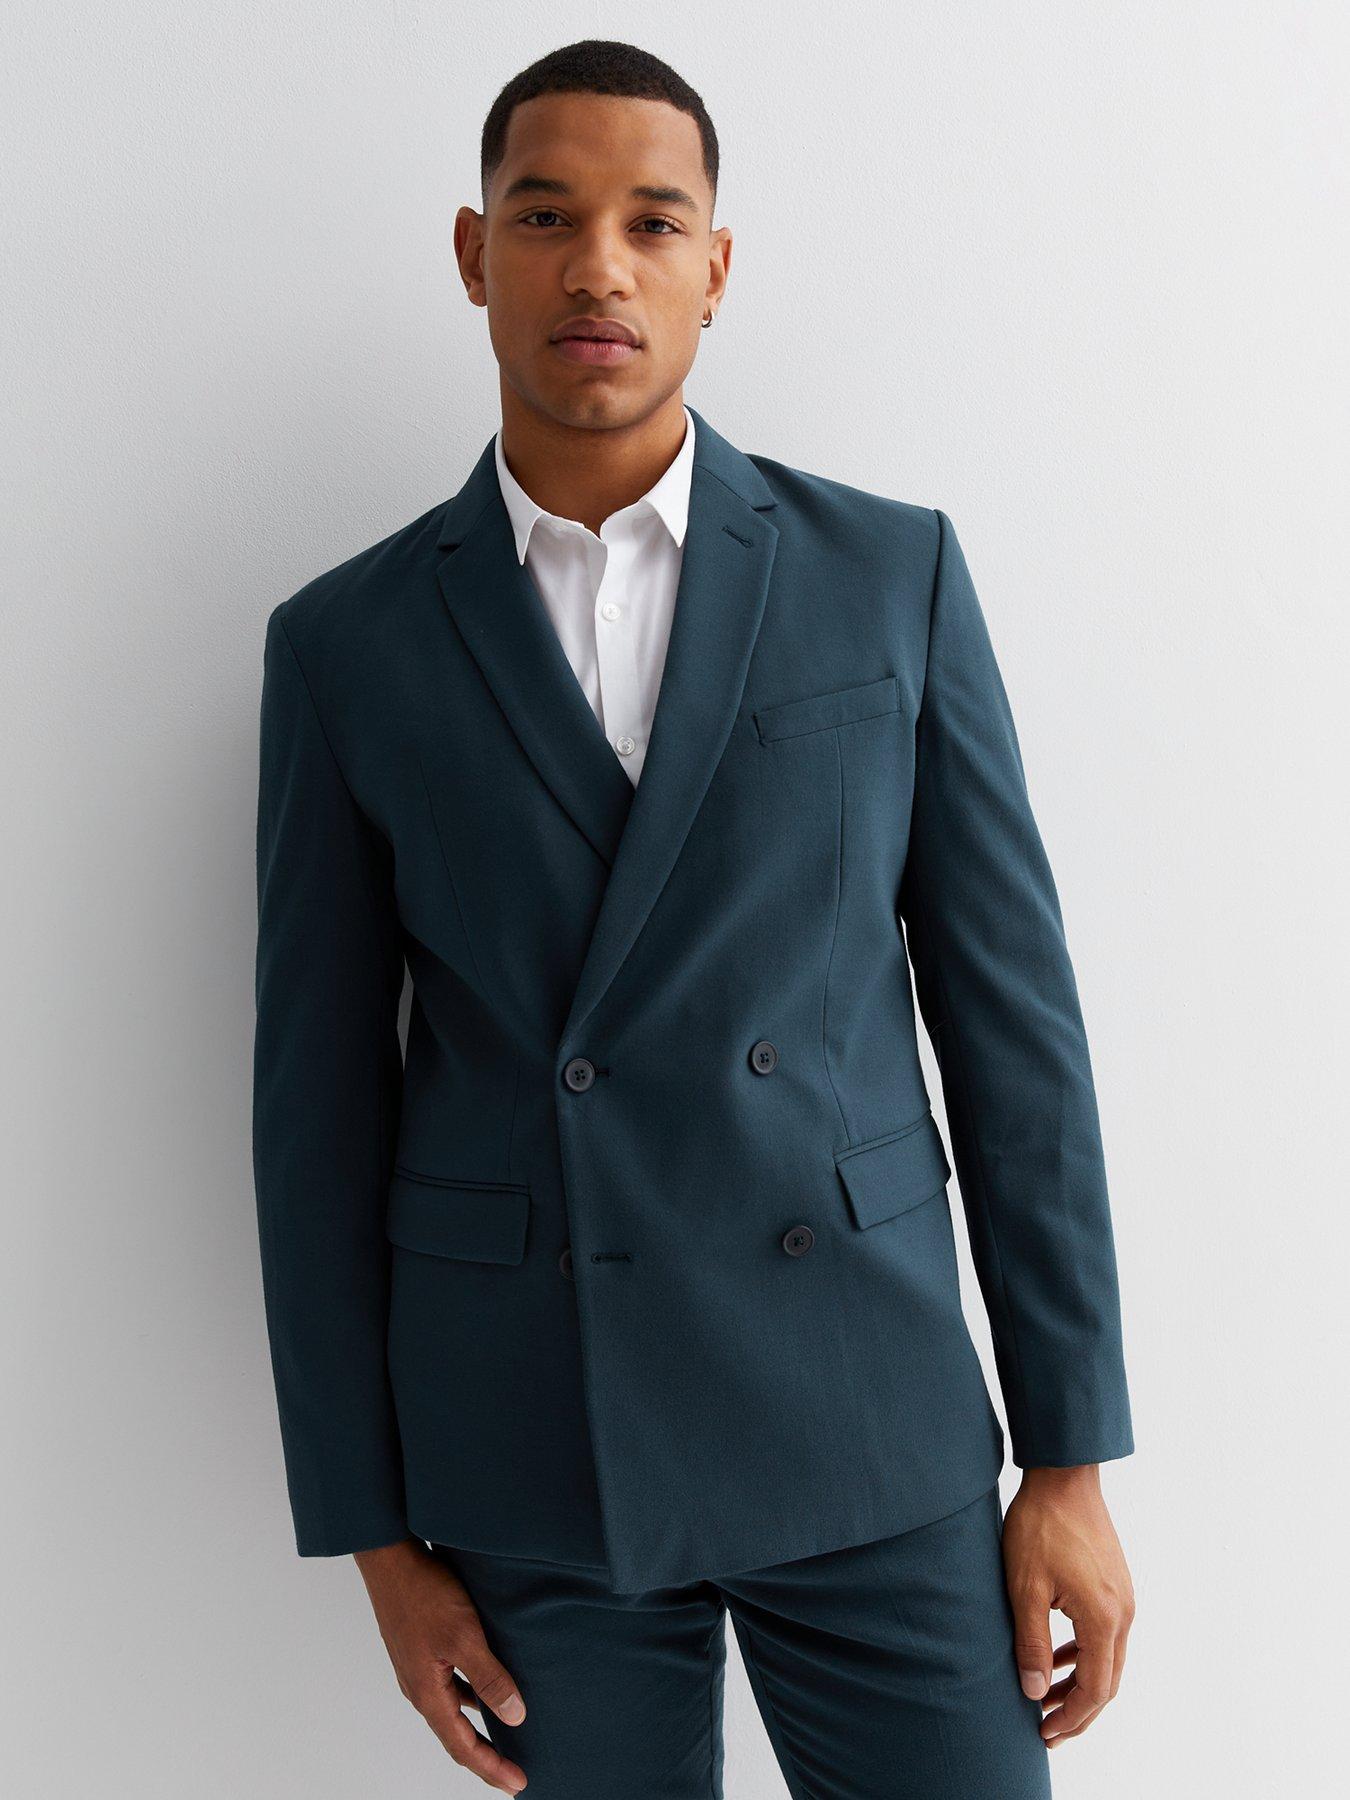 New Look, Jackets & Coats